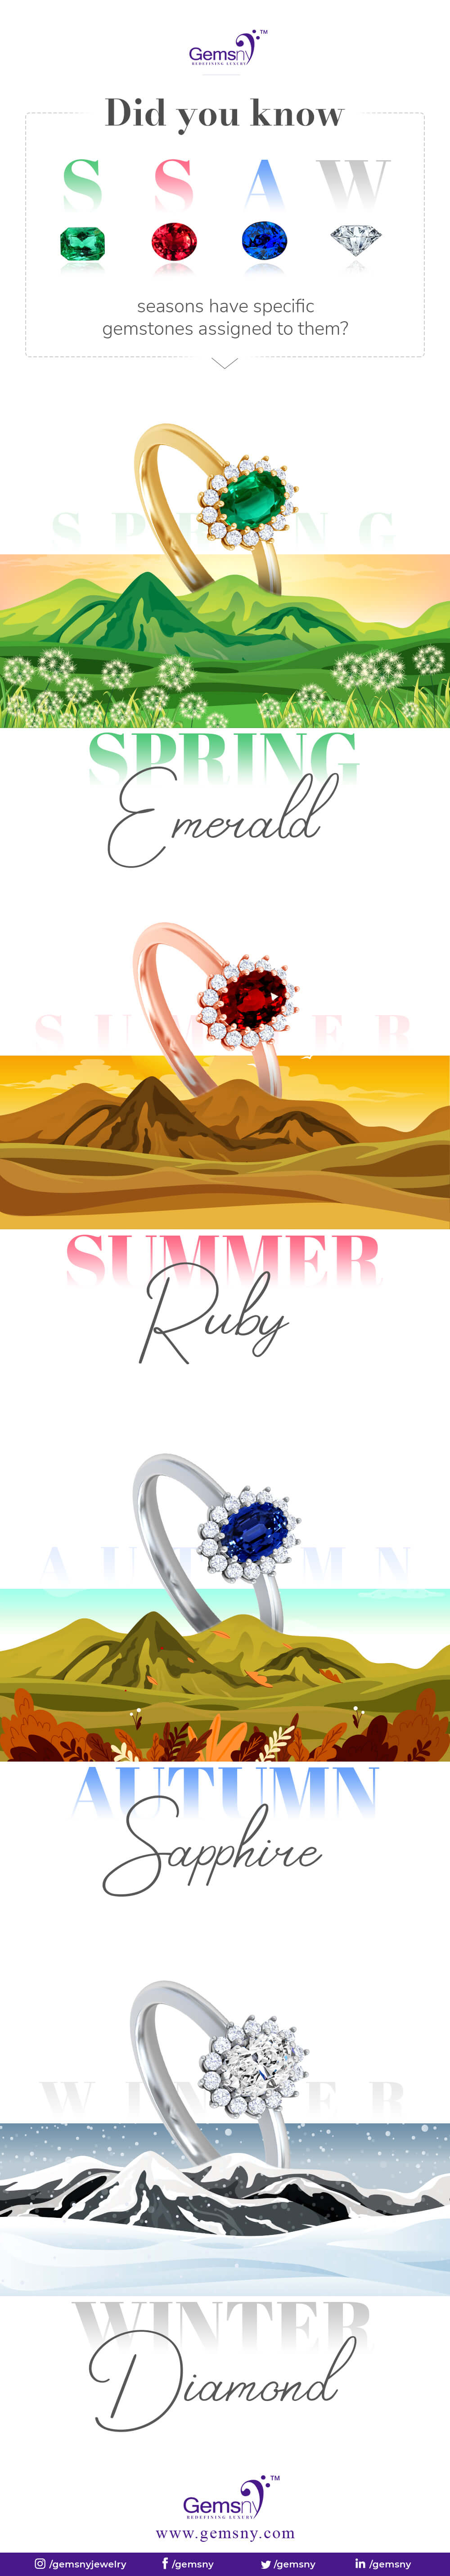 Season Wise Gemstones: Emerald, Ruby, Sapphire and Diamond